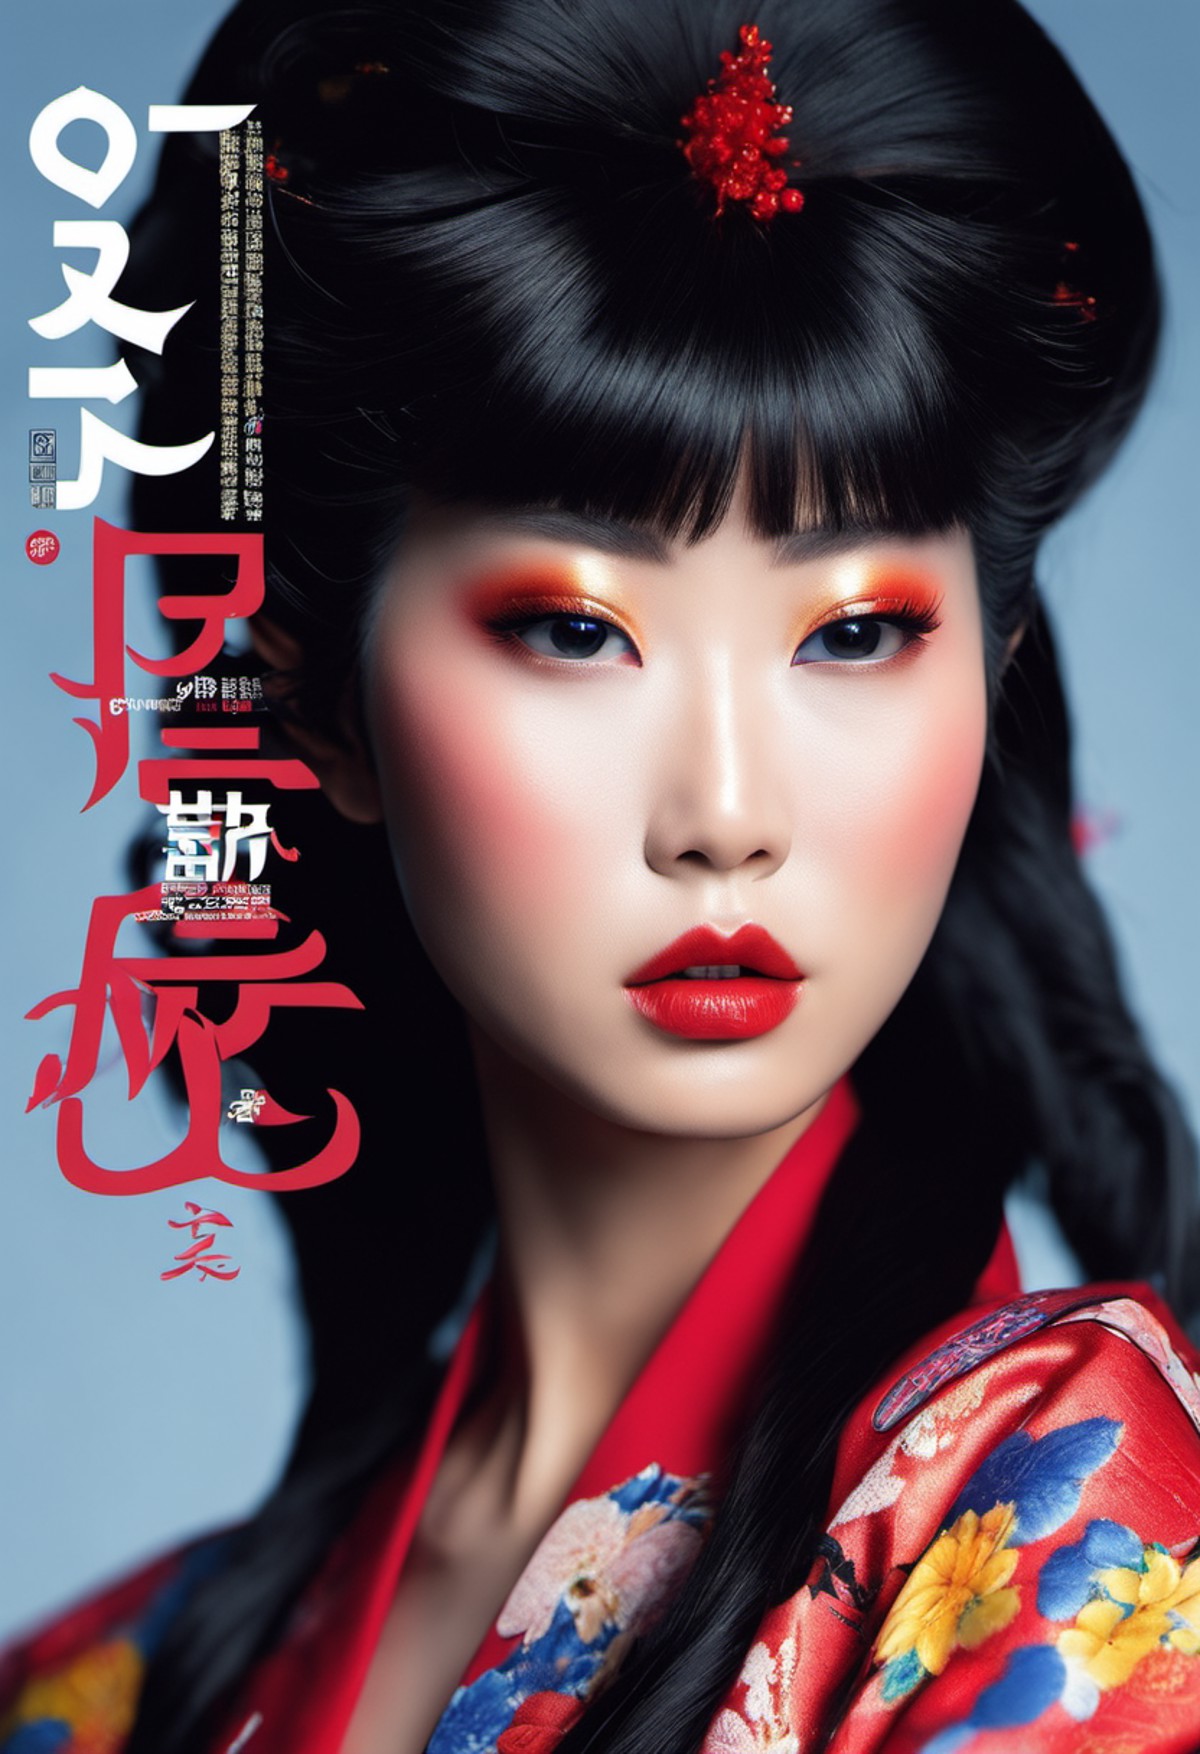 ('Waifu' Magazine cover:1.3) (minimal design, clear title header), (Candid 1.3), photo of a vivacious (Japanese|Israeli) s...